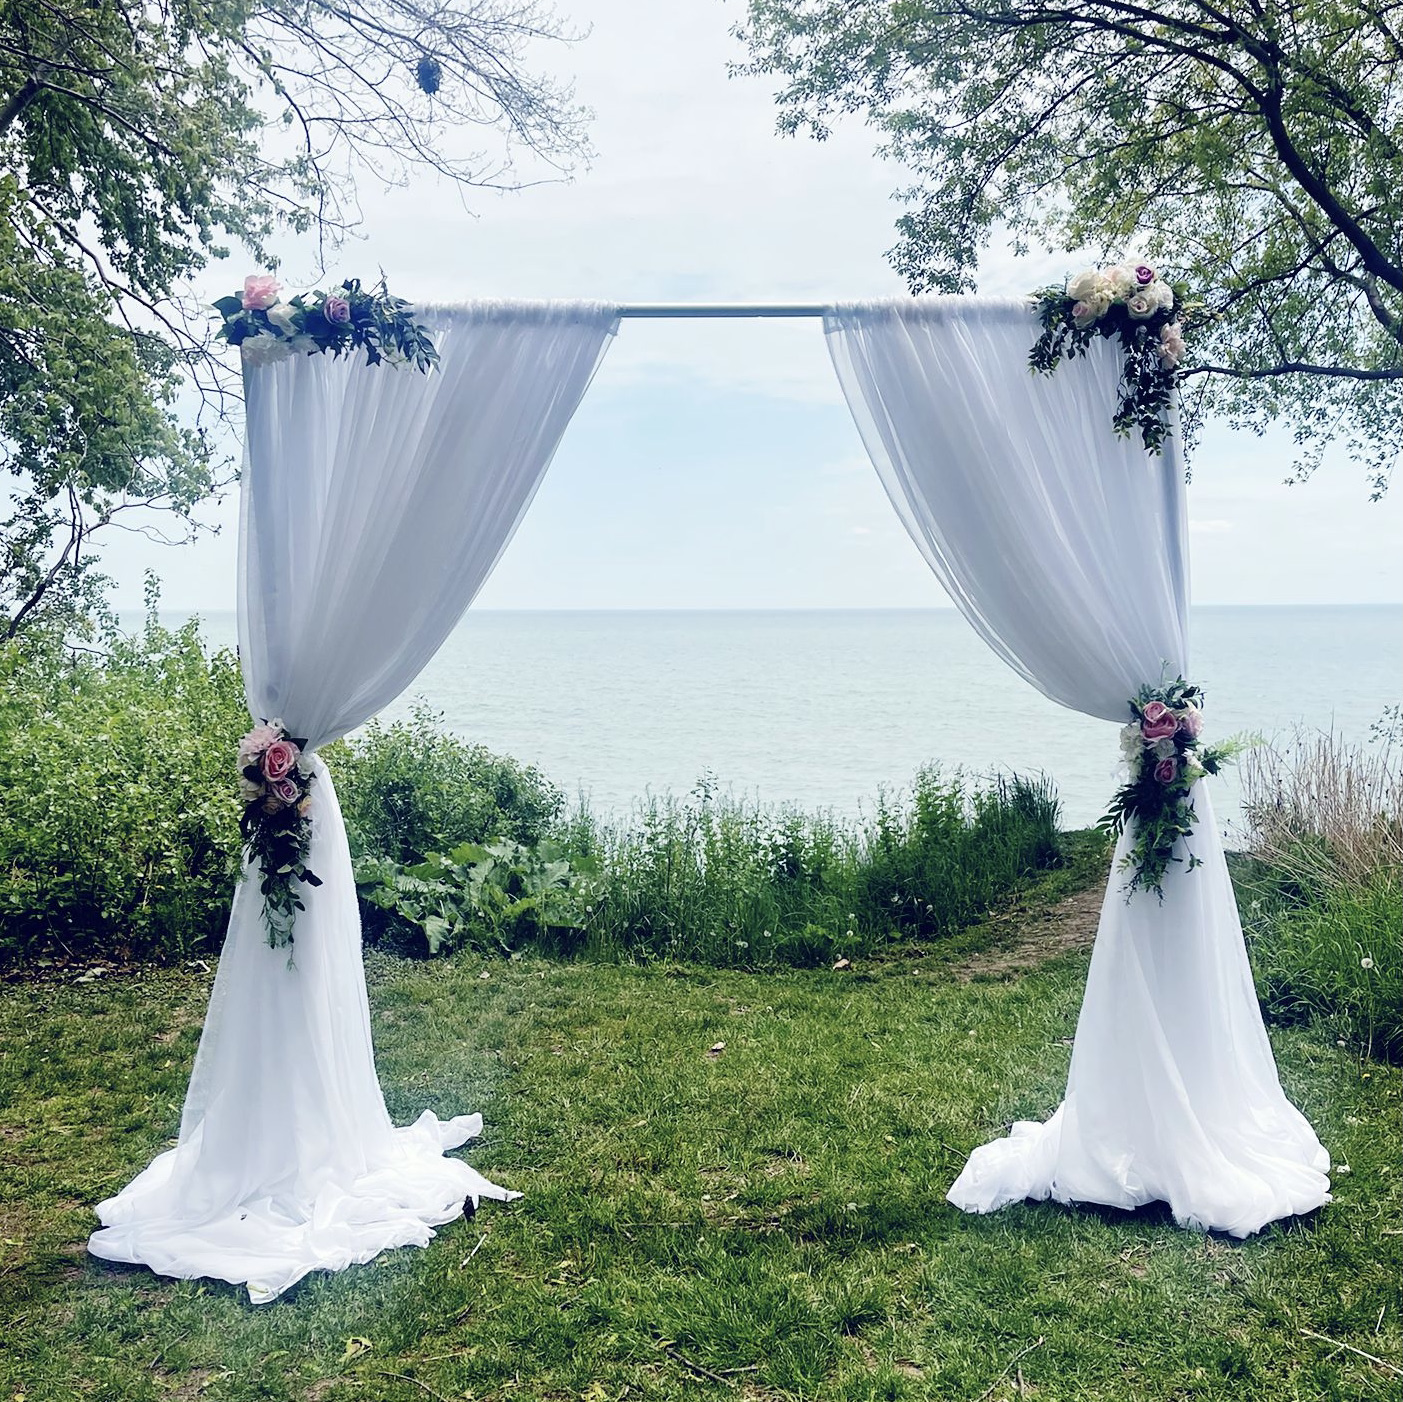 orangeville wedding flower arch with drapes